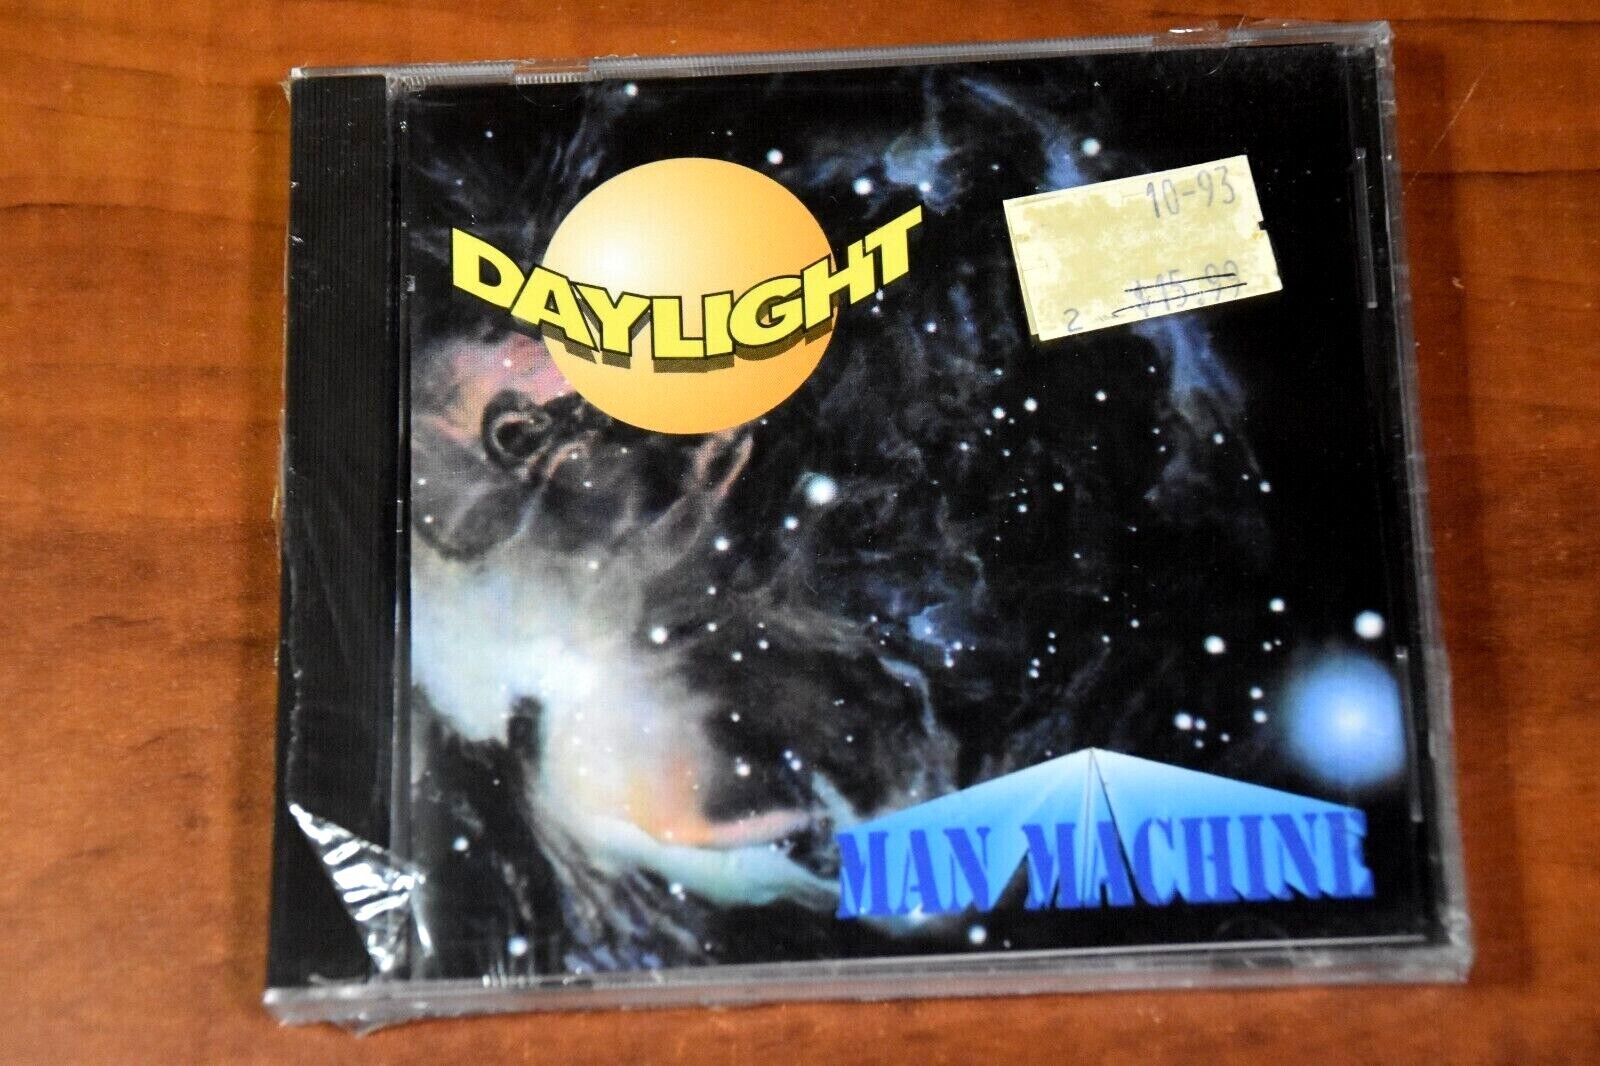 Daylight by Man Machine (CD, 1992, Hotsound HS 9208 cd, Holland) - NEW, SEALED